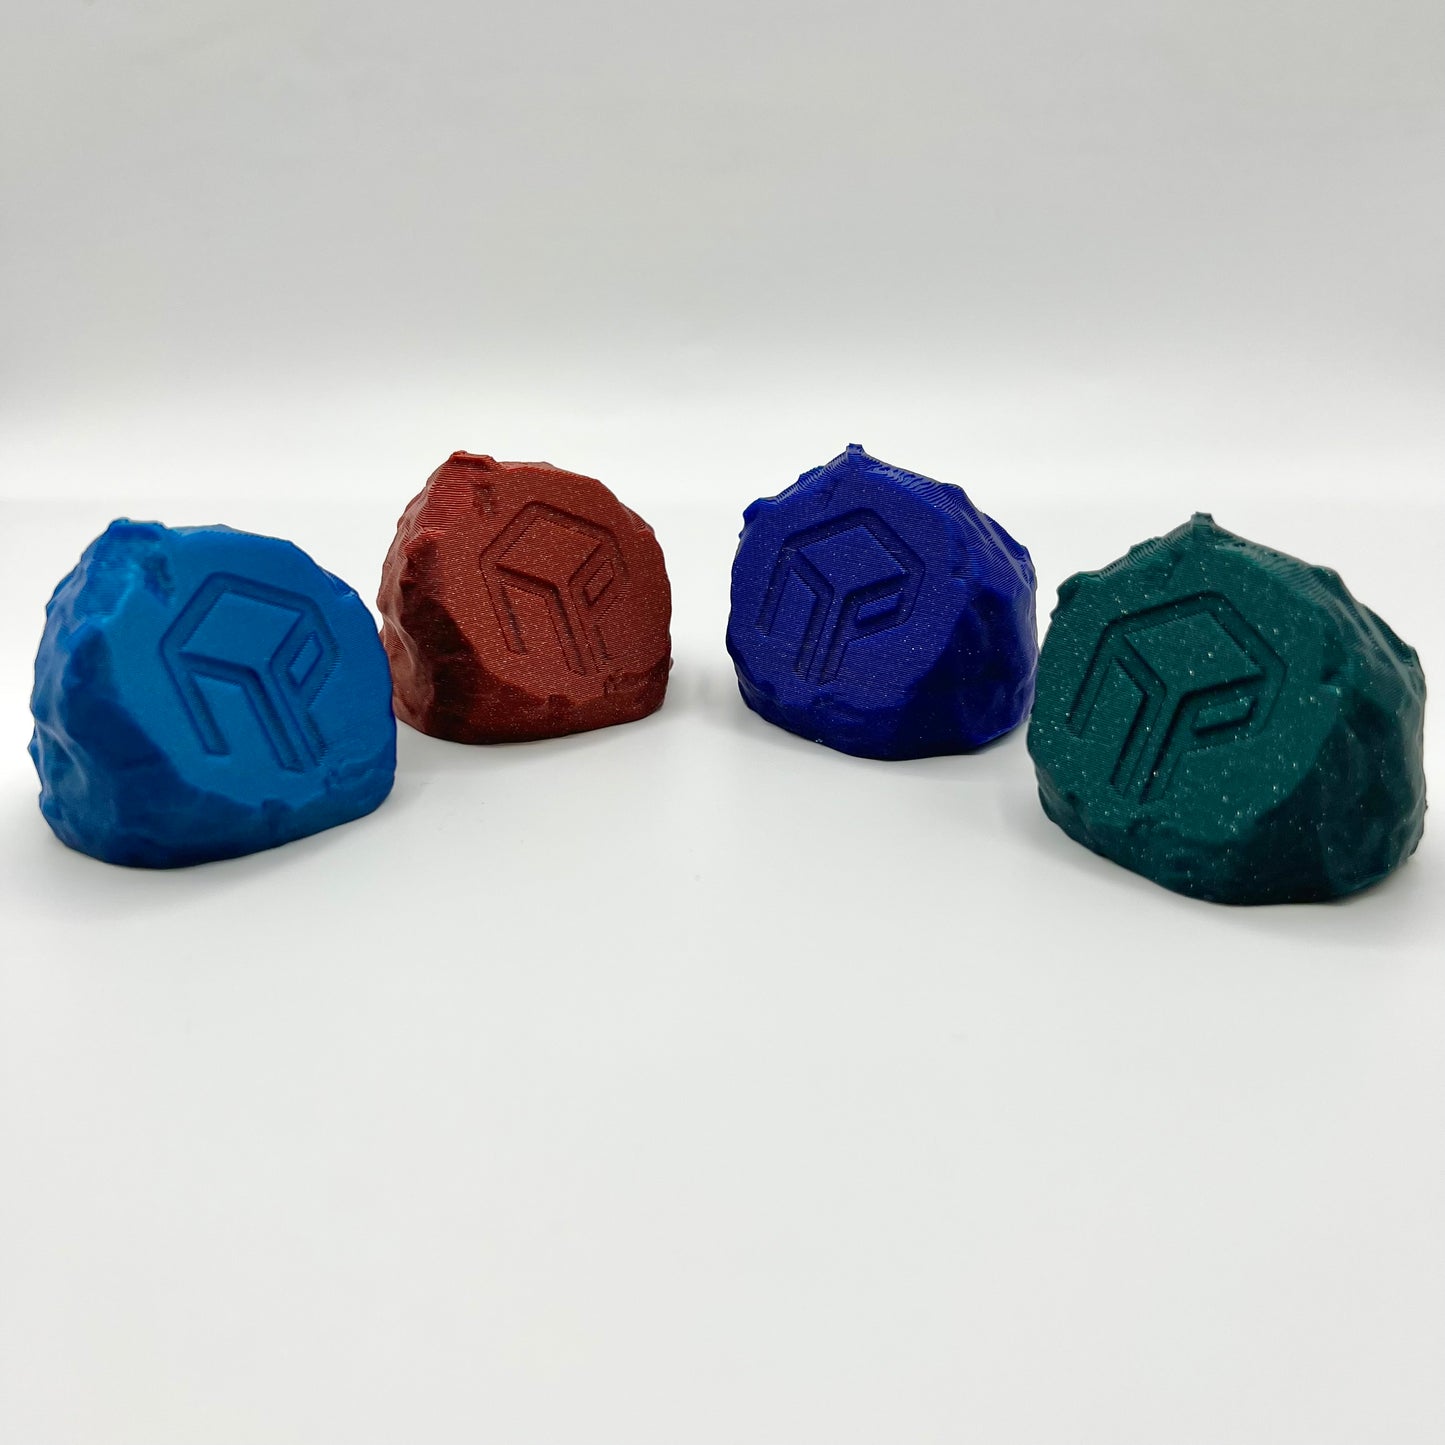 FIBERLOGY "Gemstone Special Colors" EASY PLA Filament Variety Sample Pack - Premium 3D Printing Materials 4X Pcs.